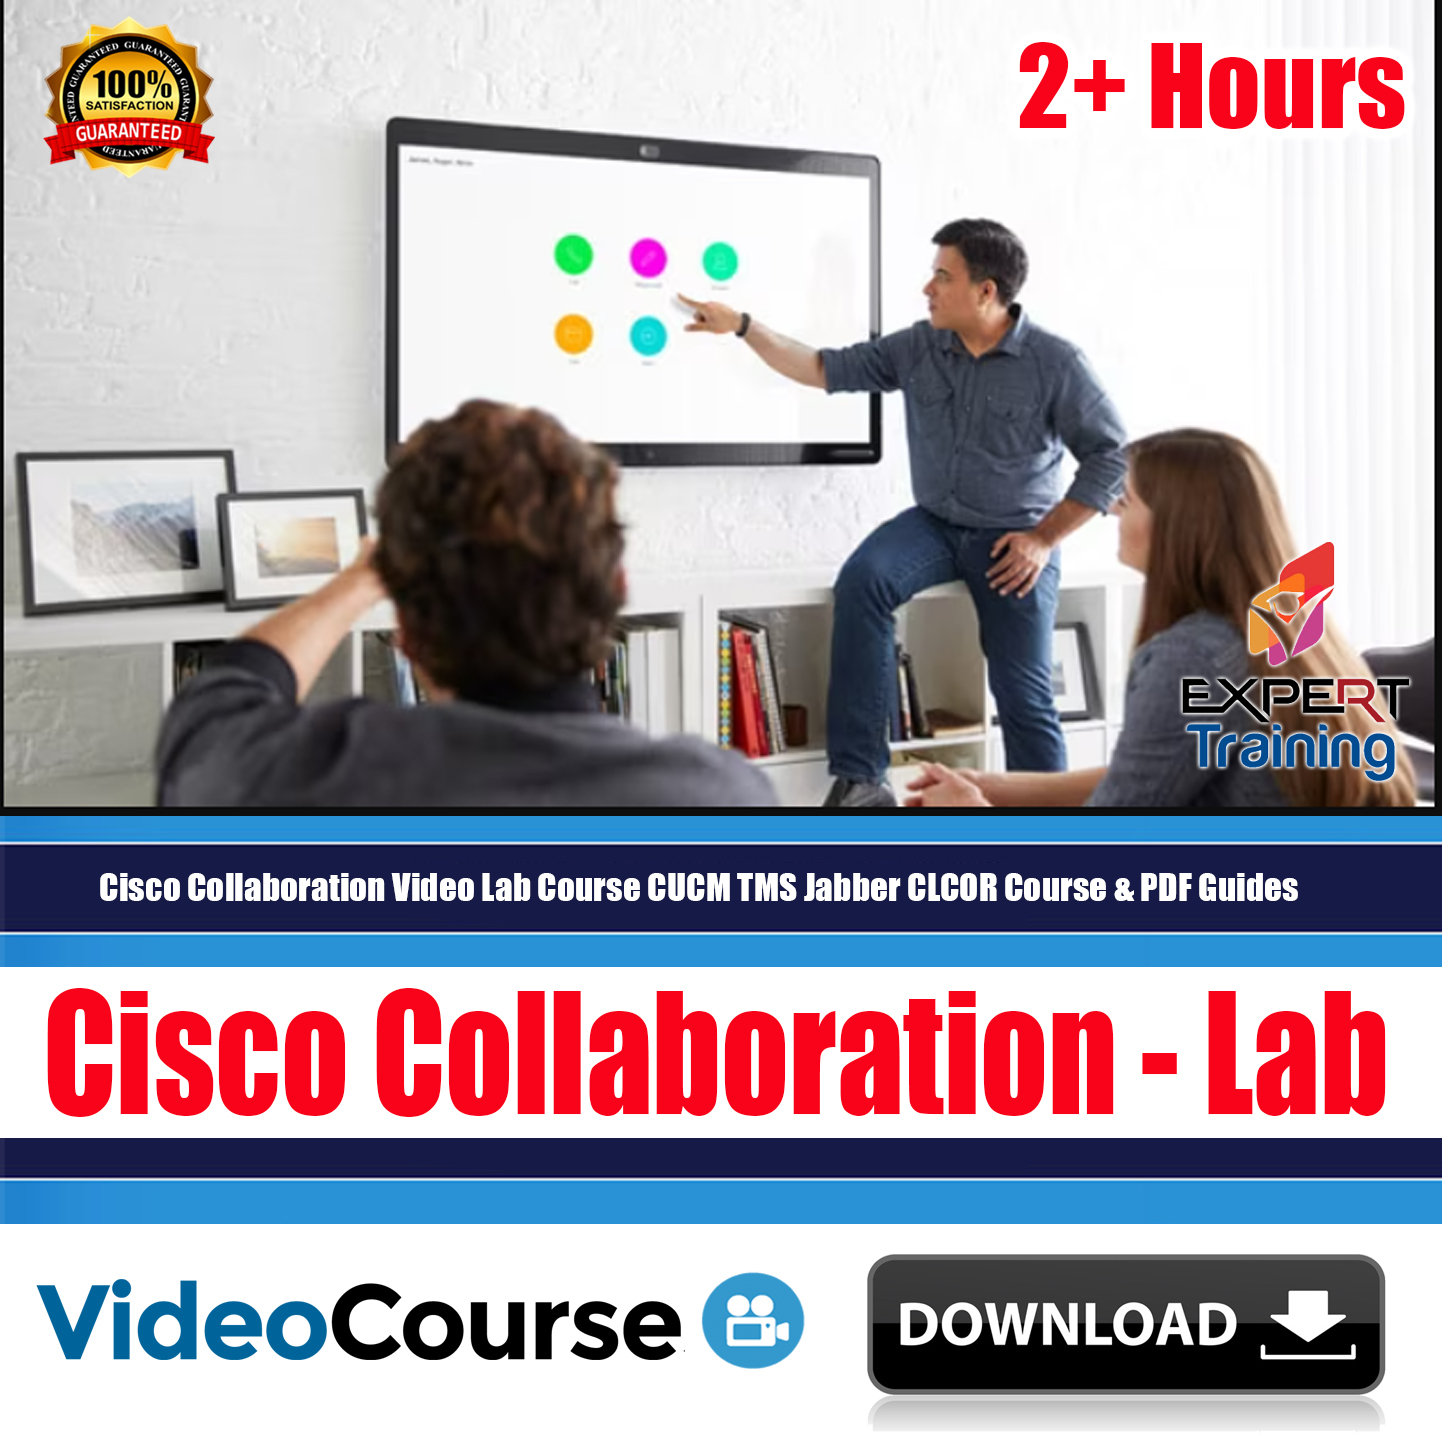 Cisco Collaboration Video Lab Course CUCM TMS Jabber CLCOR Course & PDF Guides